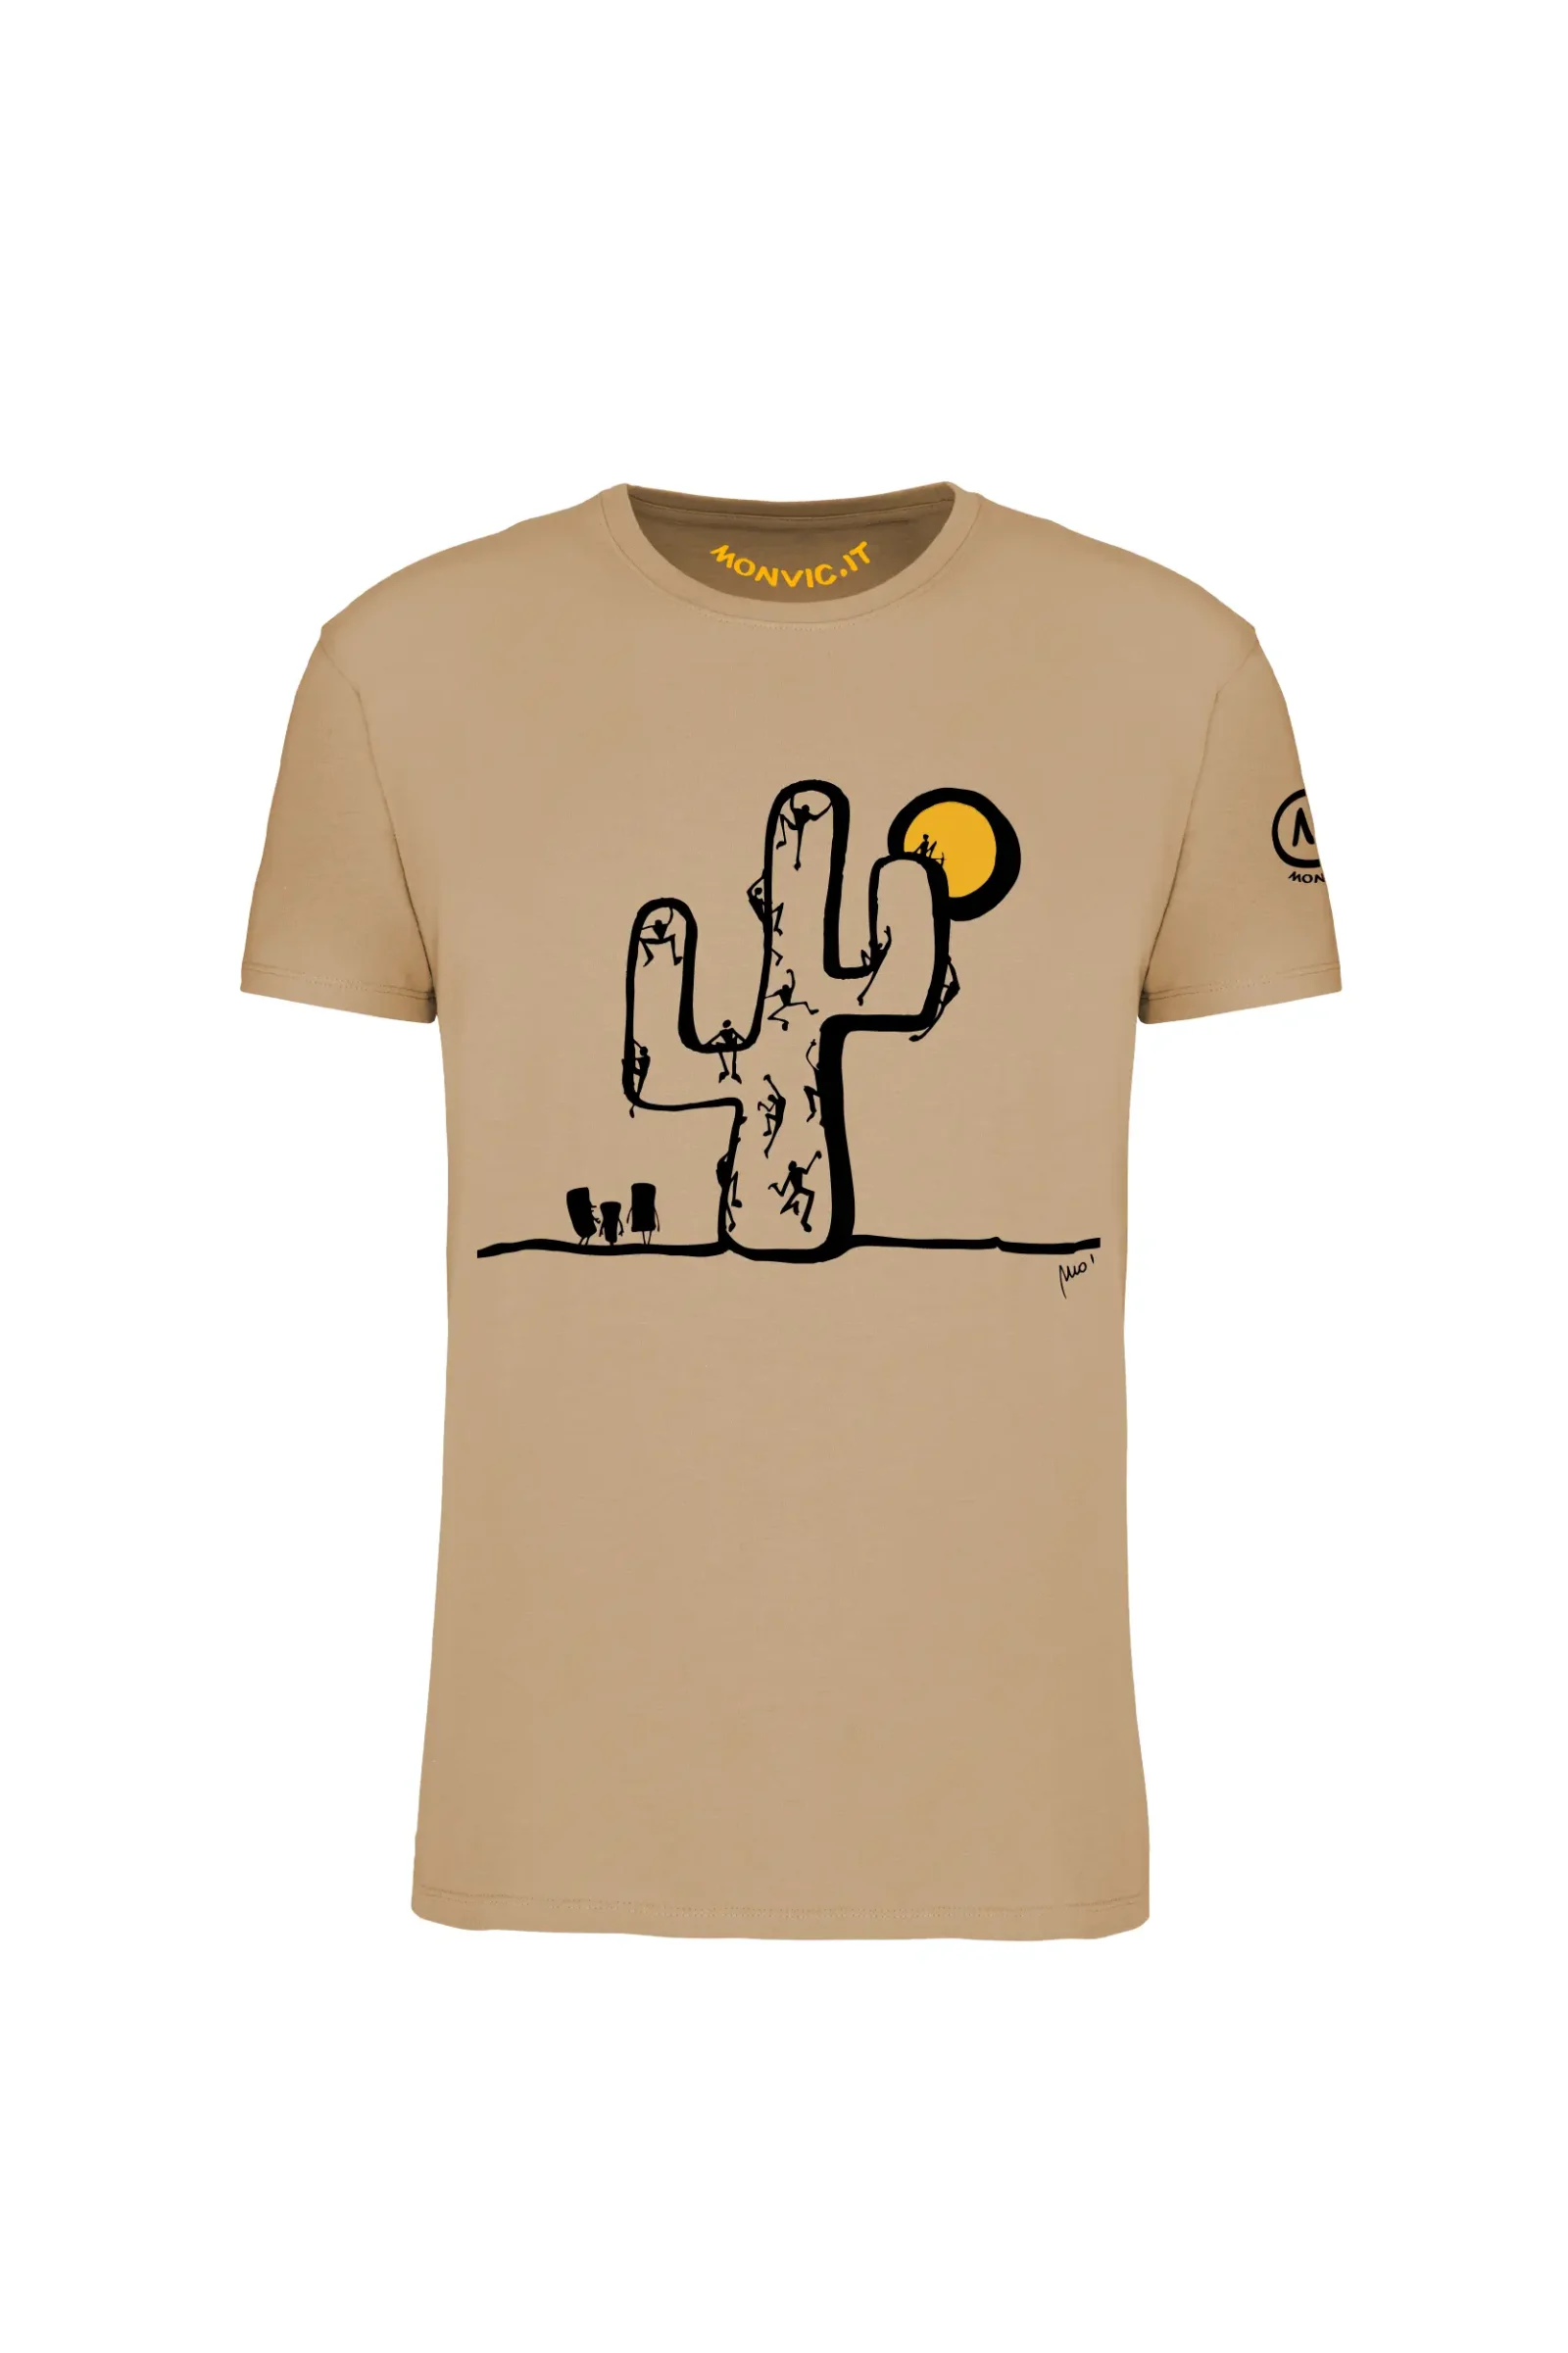 Men's climbing t-shirt - sand organic cotton - "Cactus" - HASH ORGANIC MONVIC